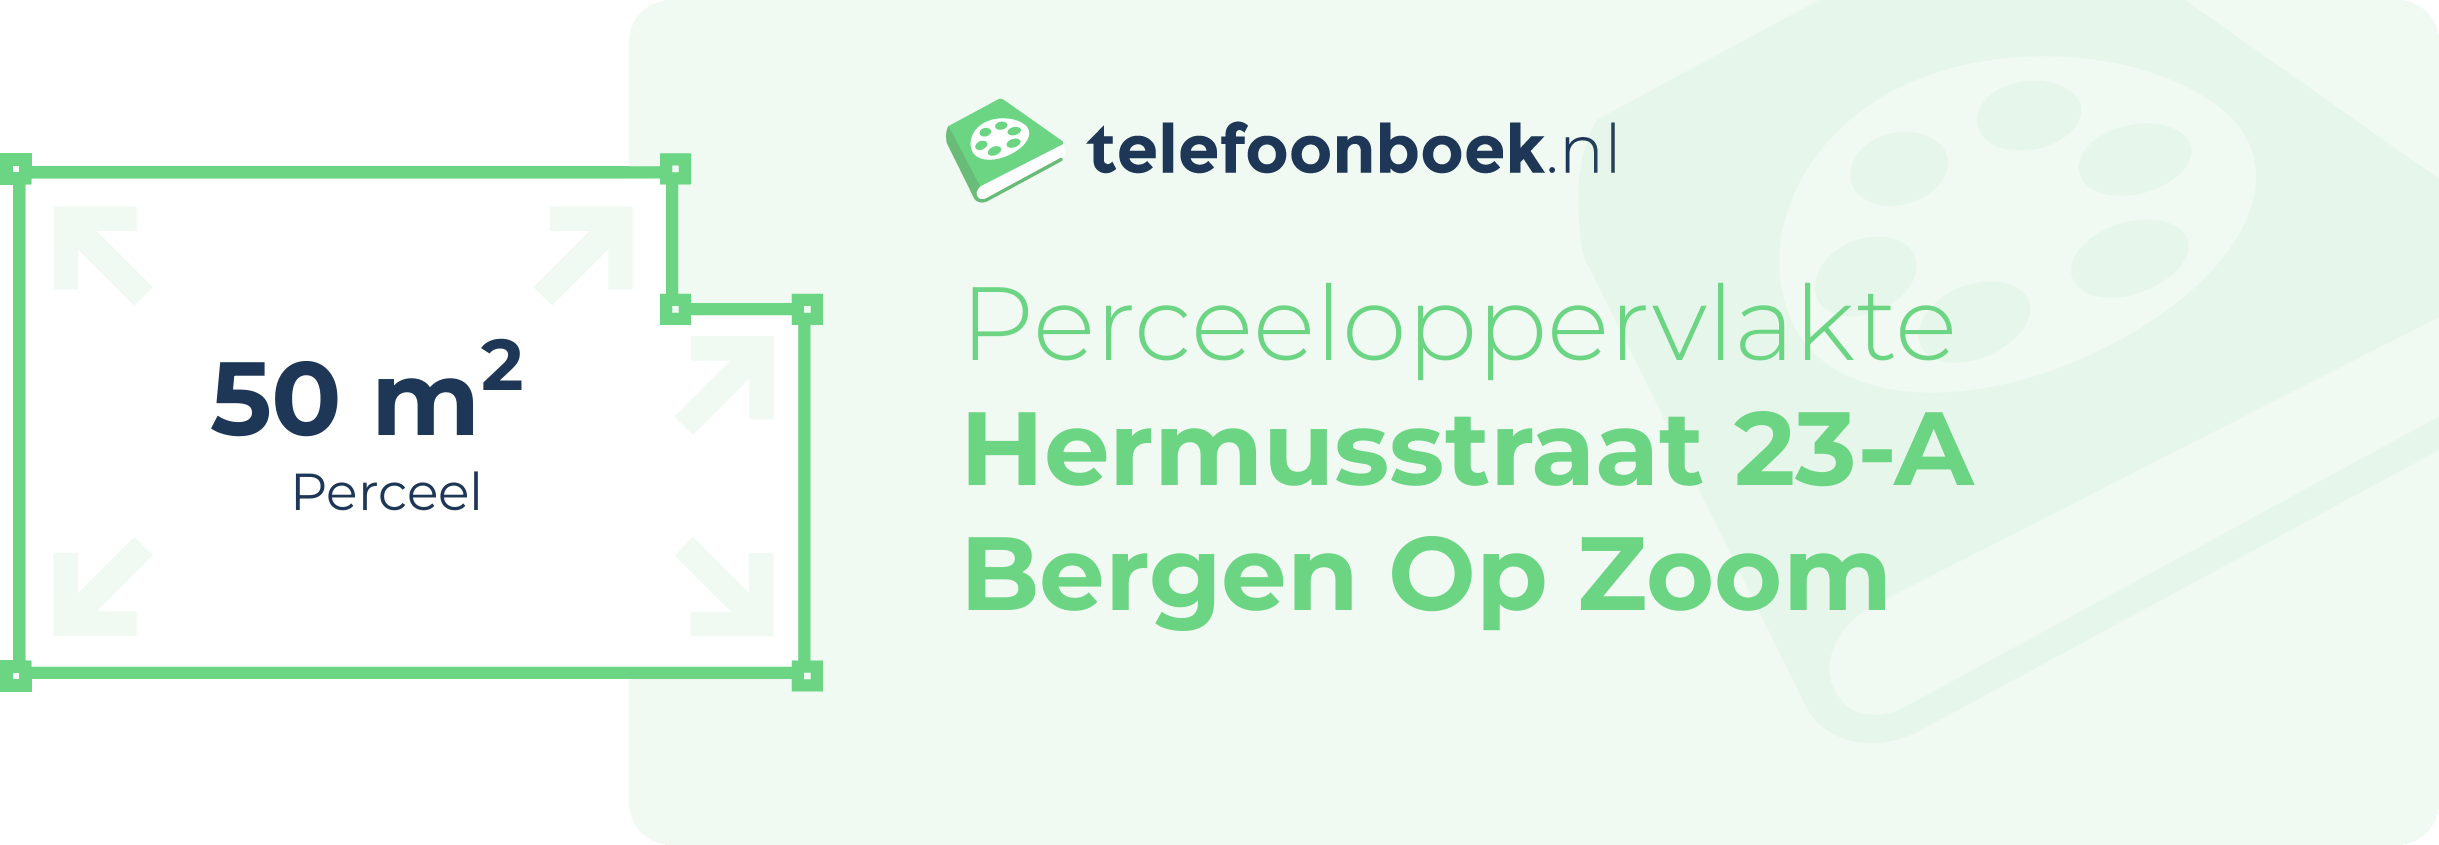 Perceeloppervlakte Hermusstraat 23-A Bergen Op Zoom